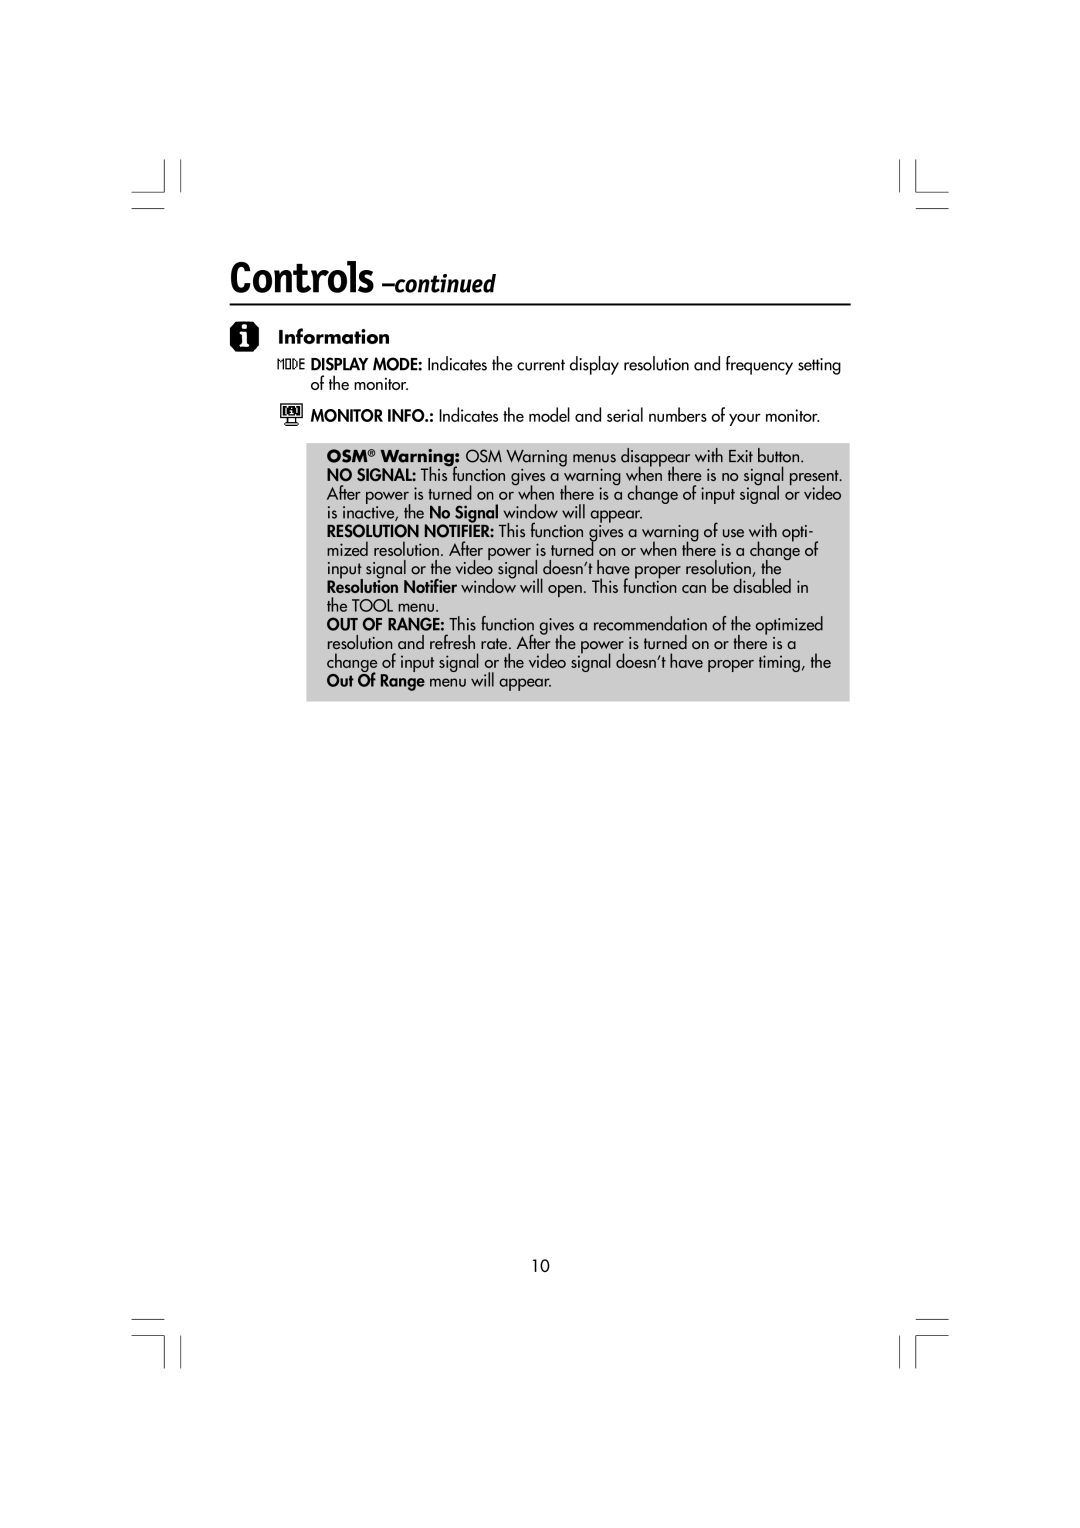 Mitsubishi Electronics LCD1560M manual Information, Controls -continued 